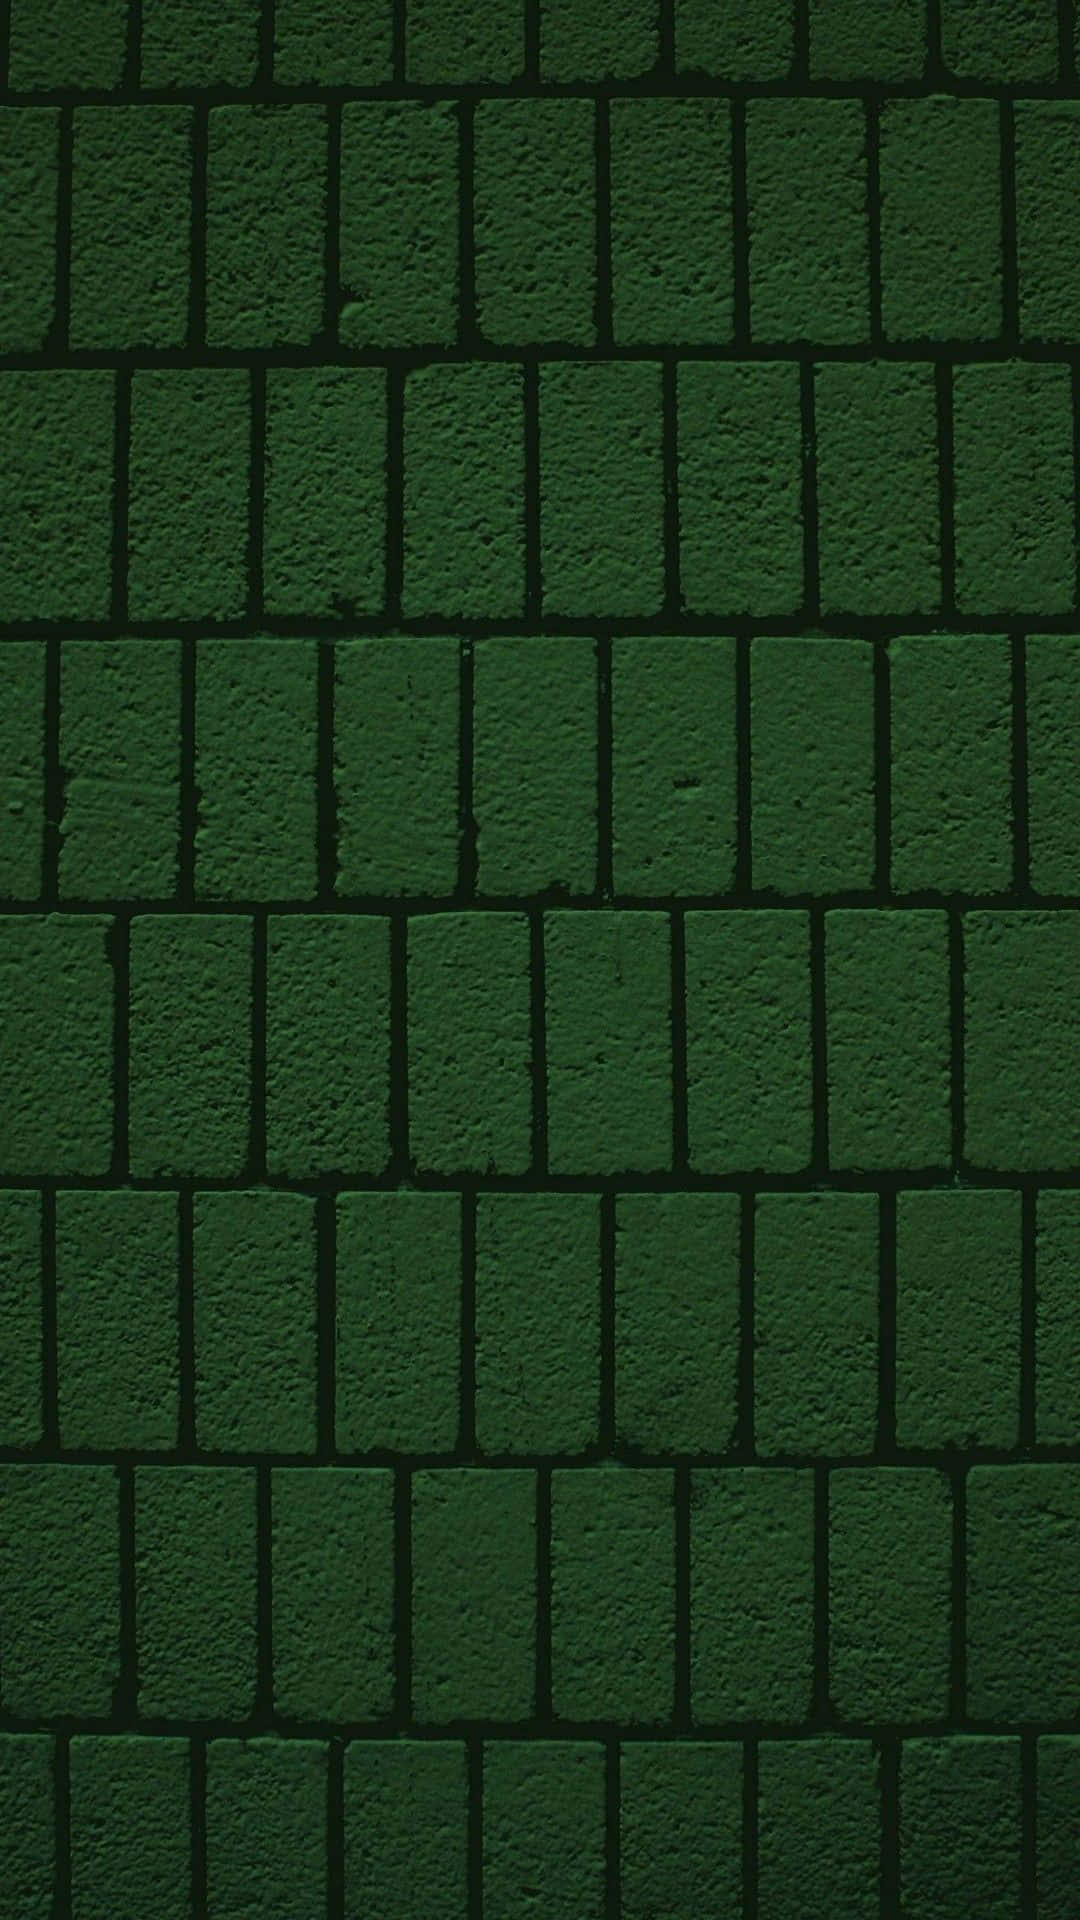 Brickväggmörkgrön Iphone. Wallpaper